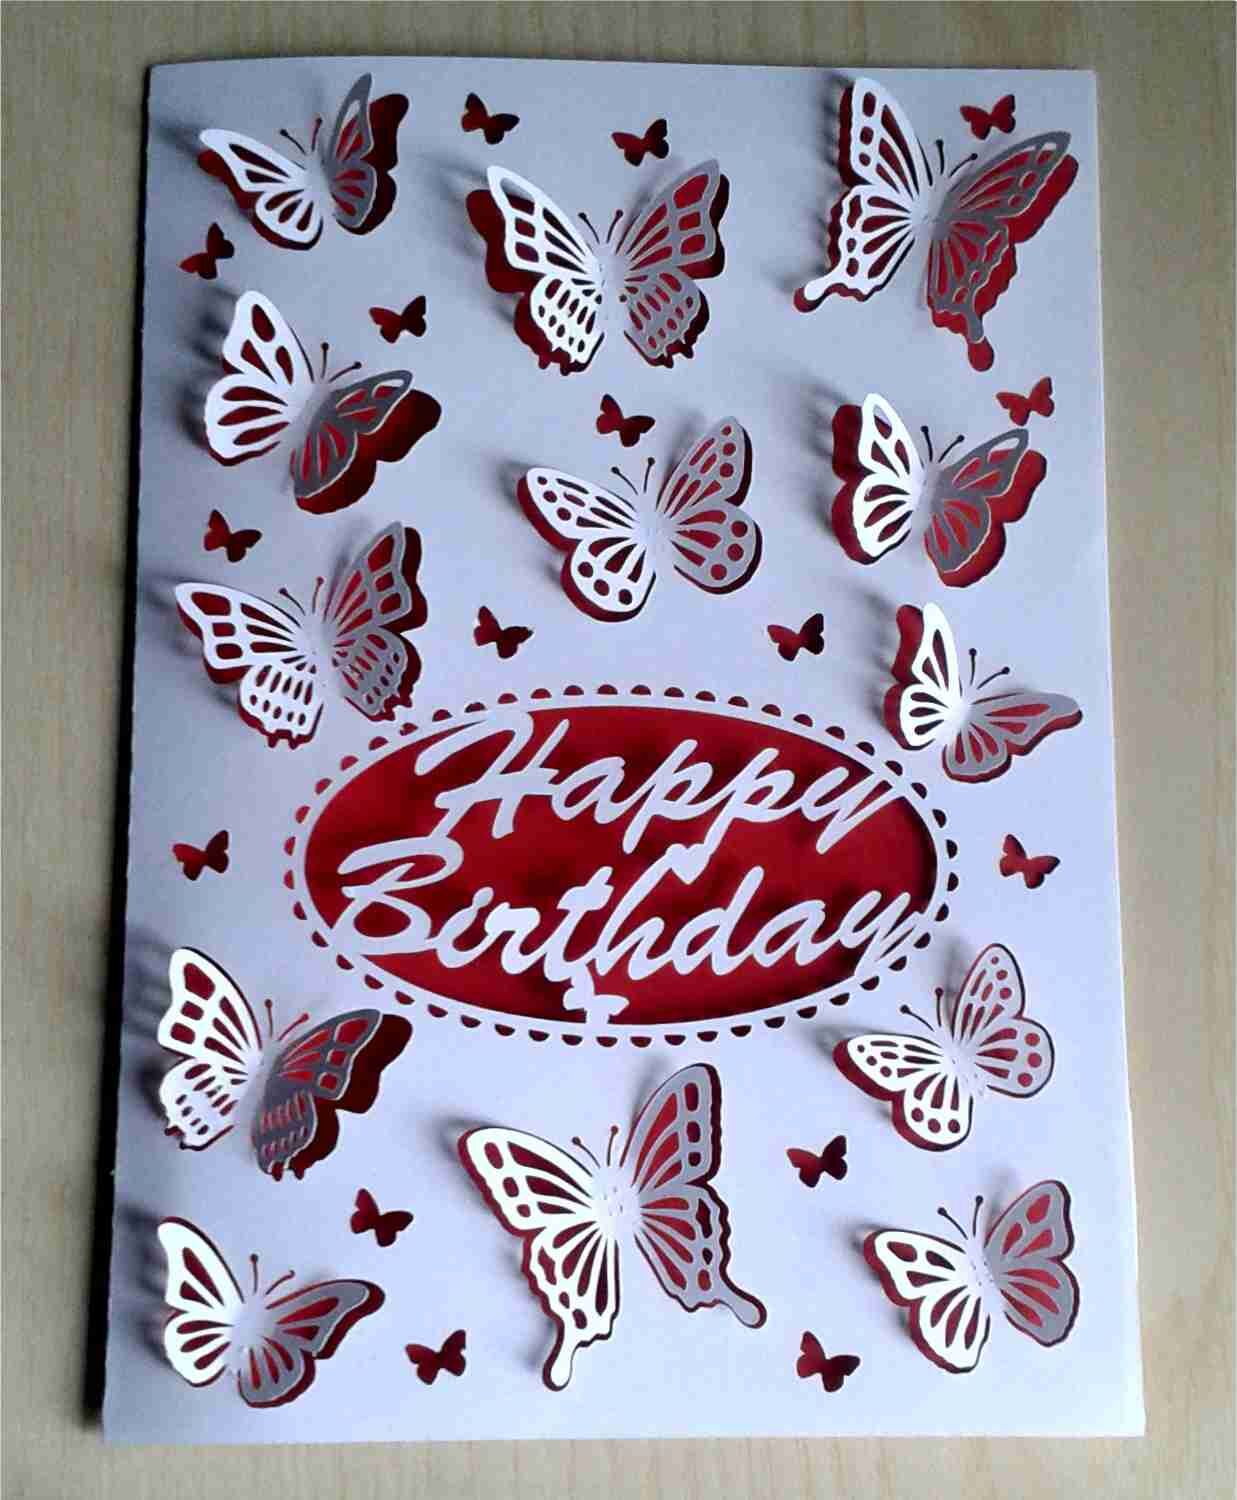 Download Happy Birthday Anniversary Greeting Card Svg Files By Pierographicsdesign Thehungryjpeg Com